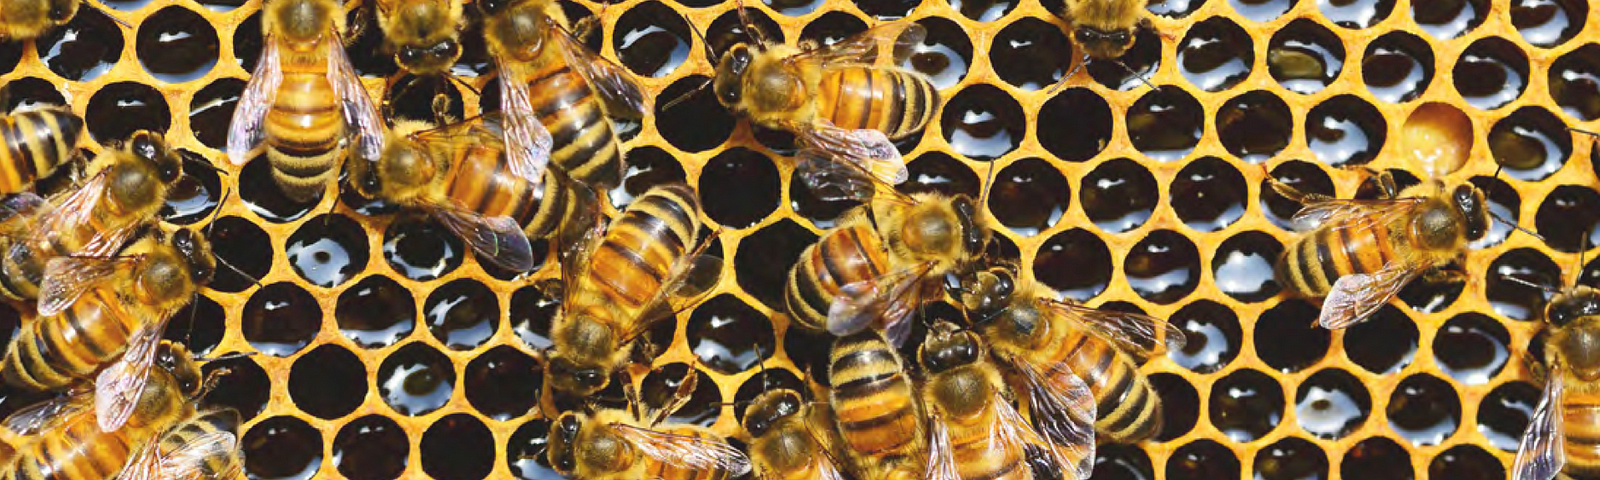 Como hacer un panal de abejas